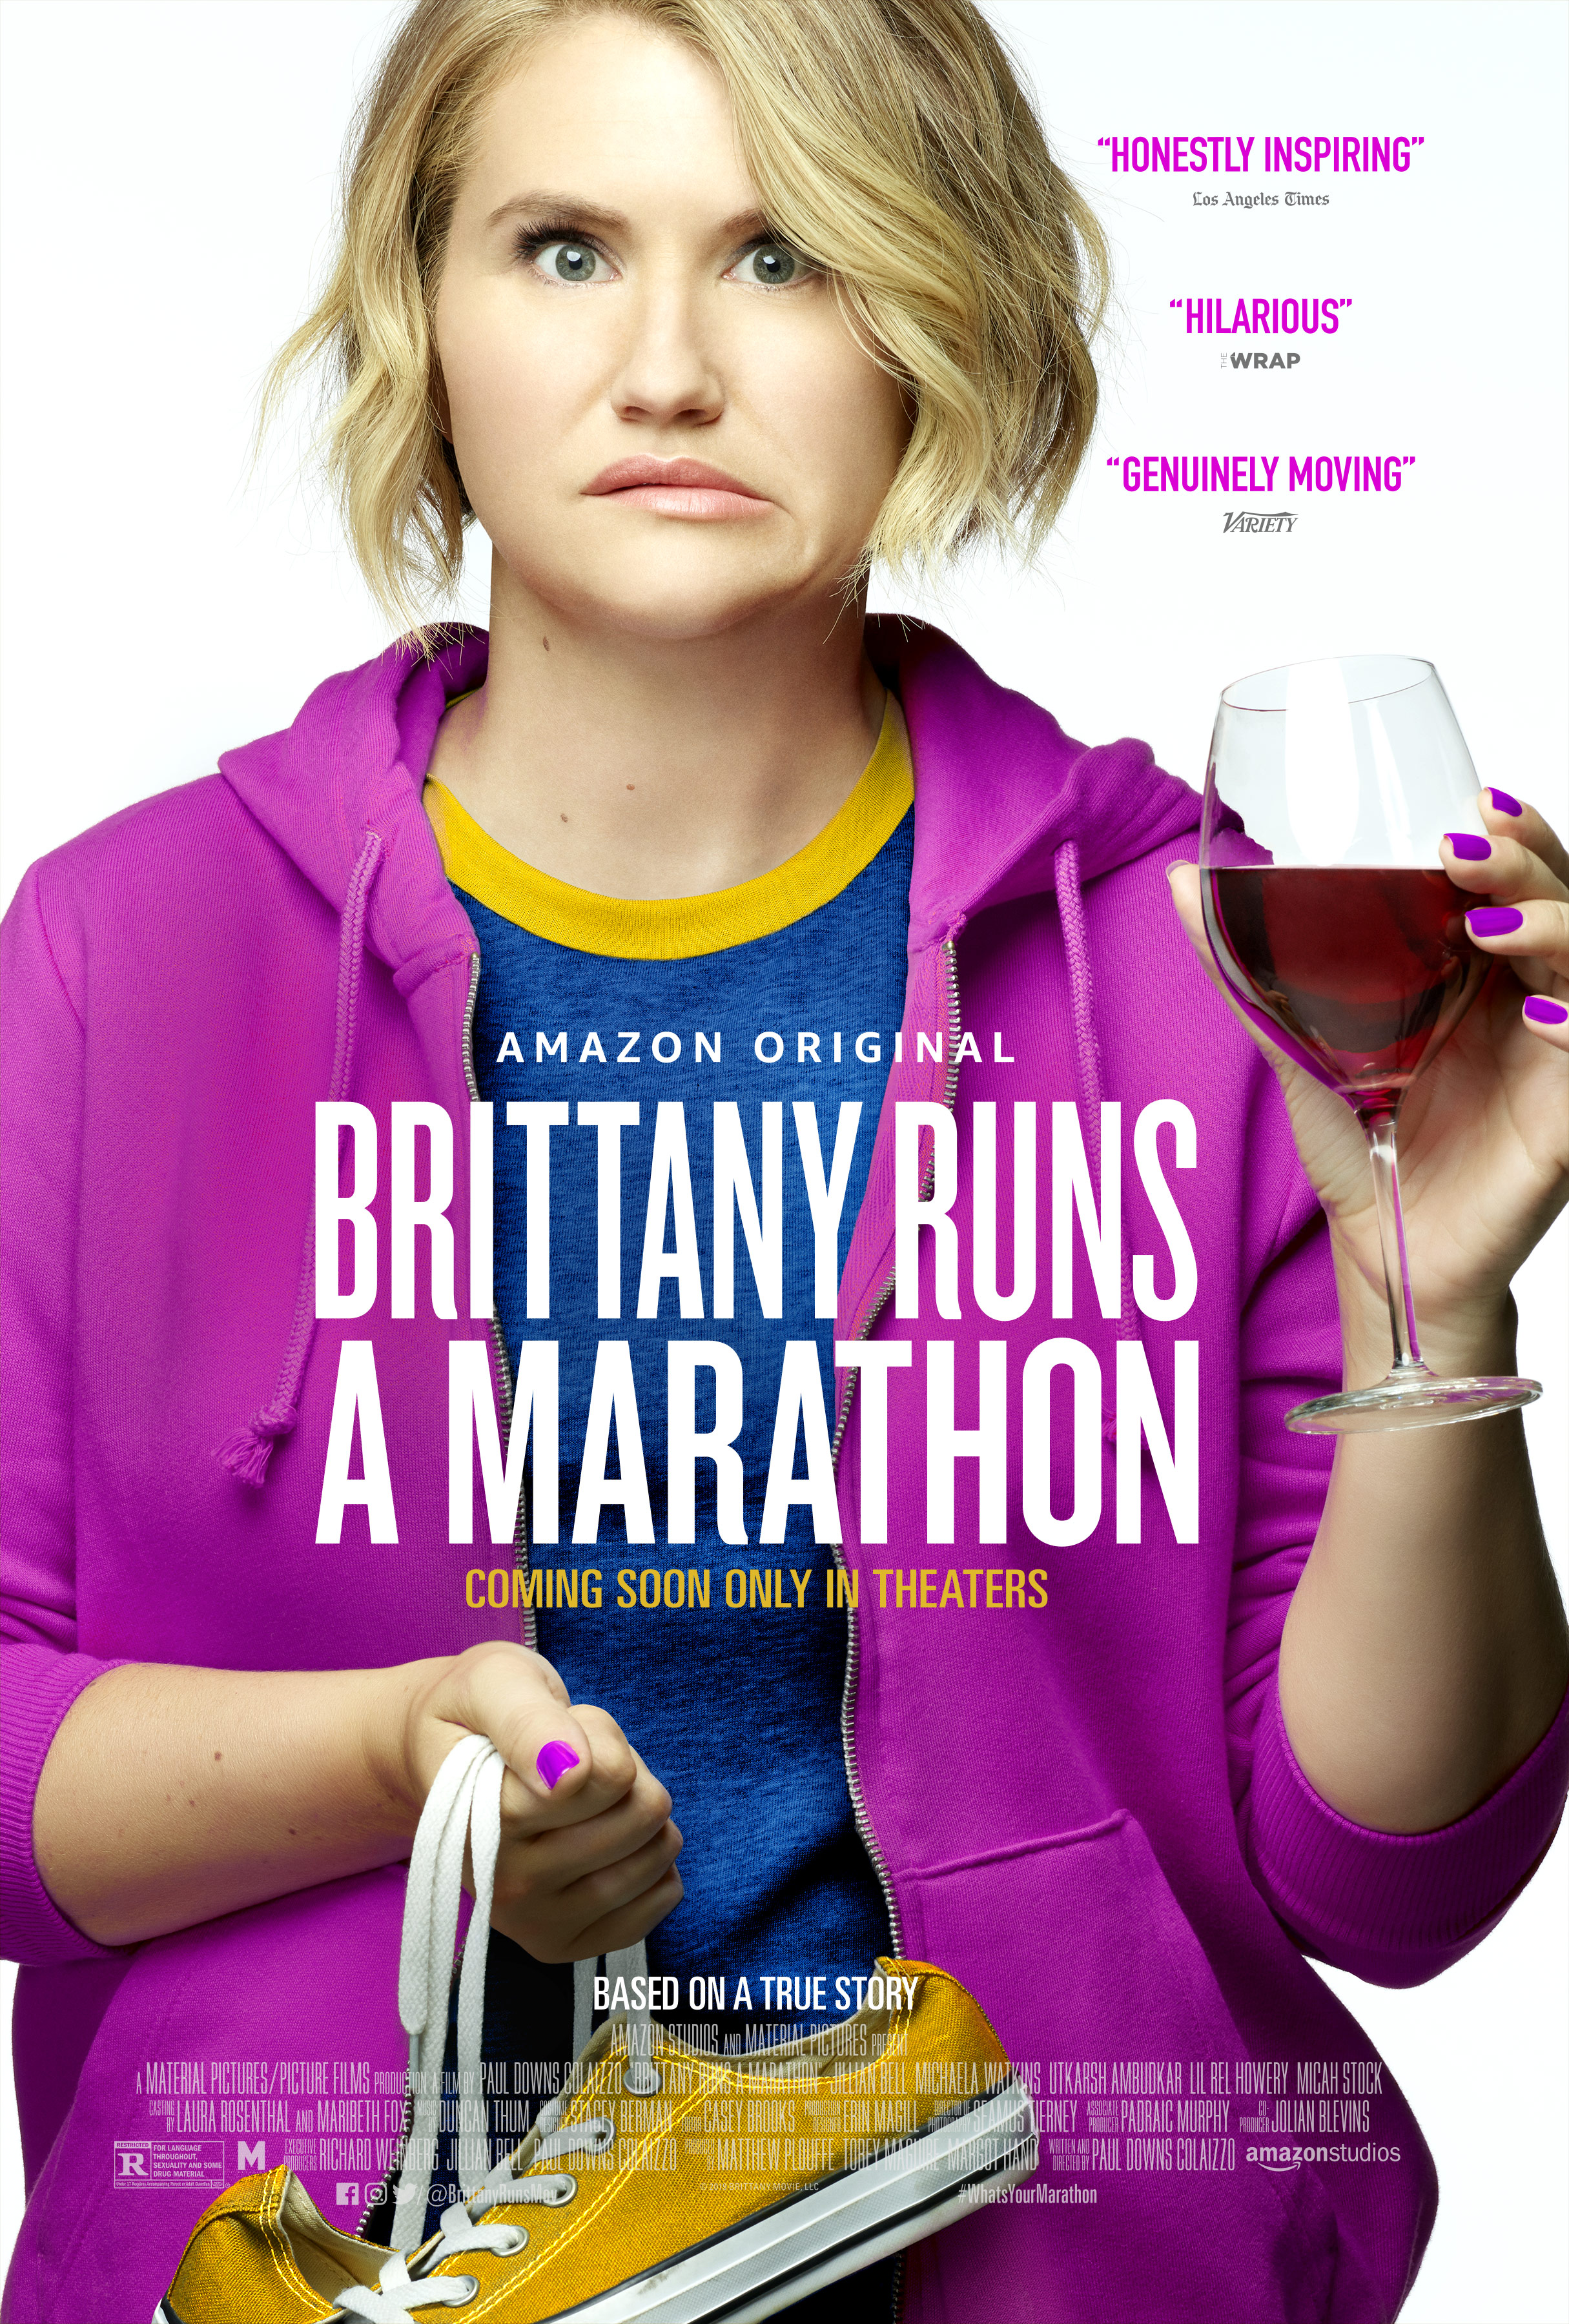 Brittany Runs a Marathon  Image